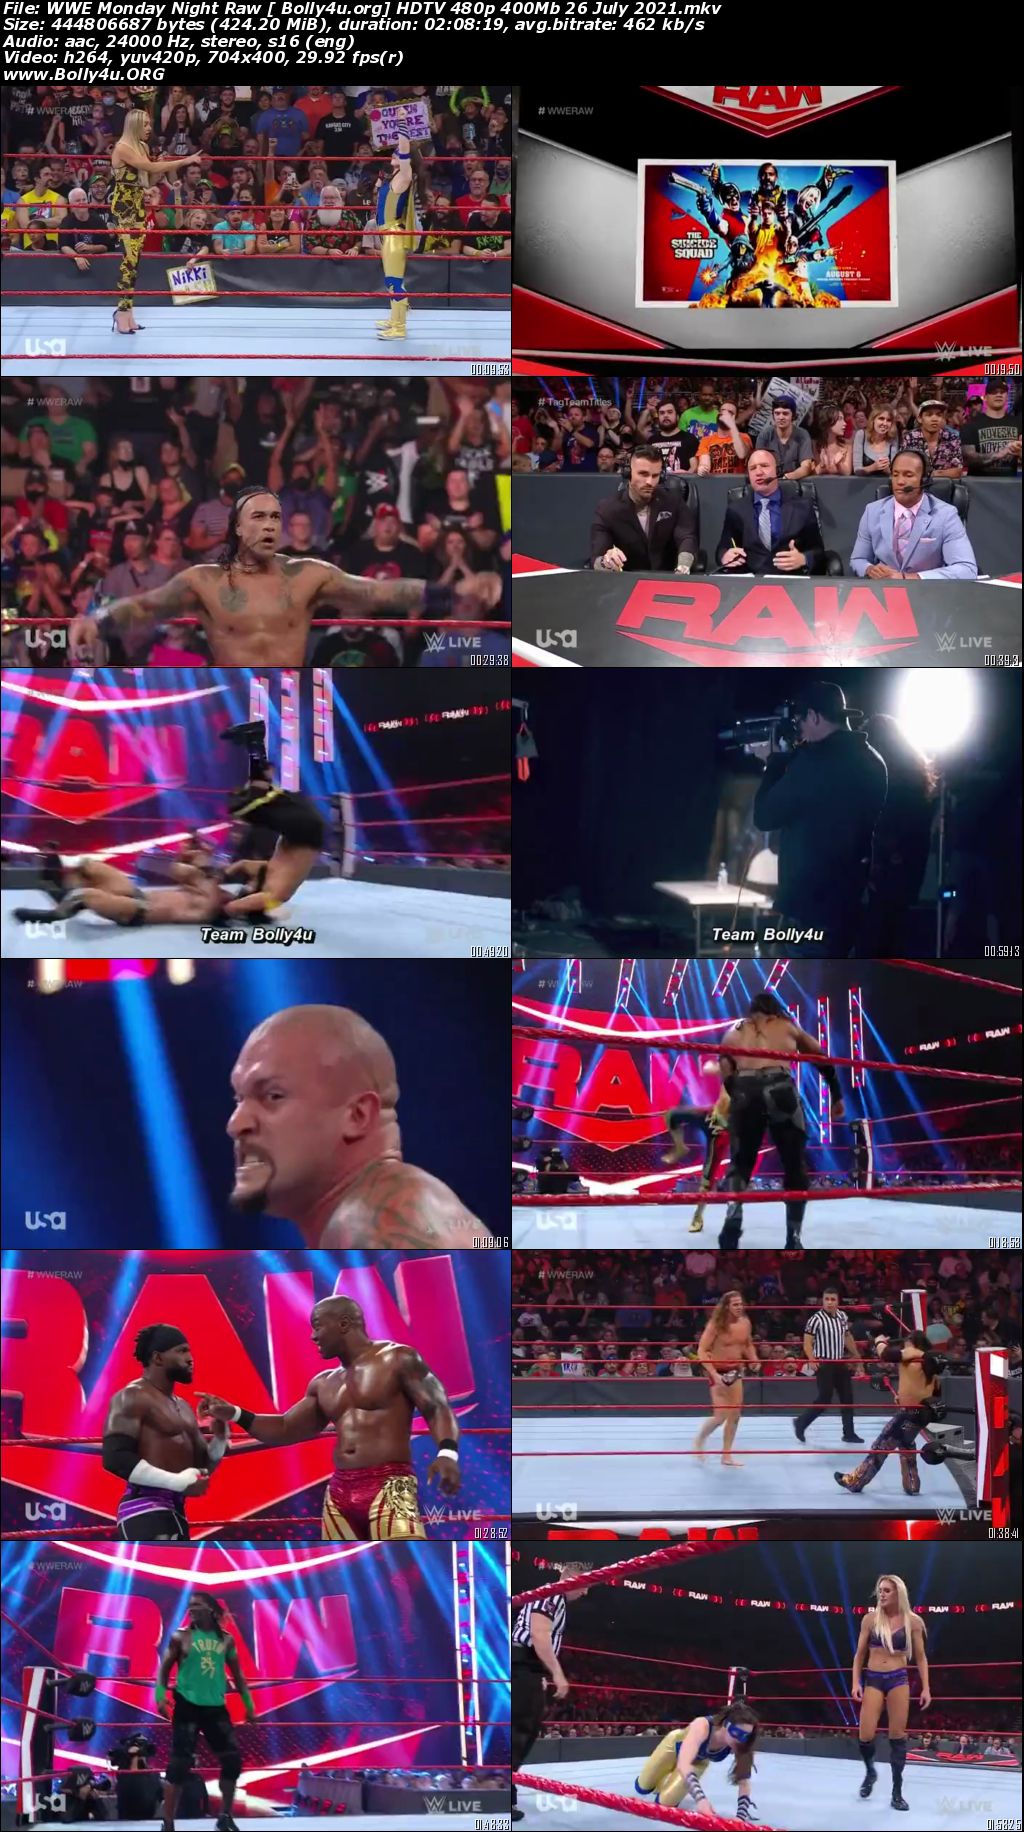 WWE Monday Night Raw HDTV 480p 400Mb 26 July 2021 Download